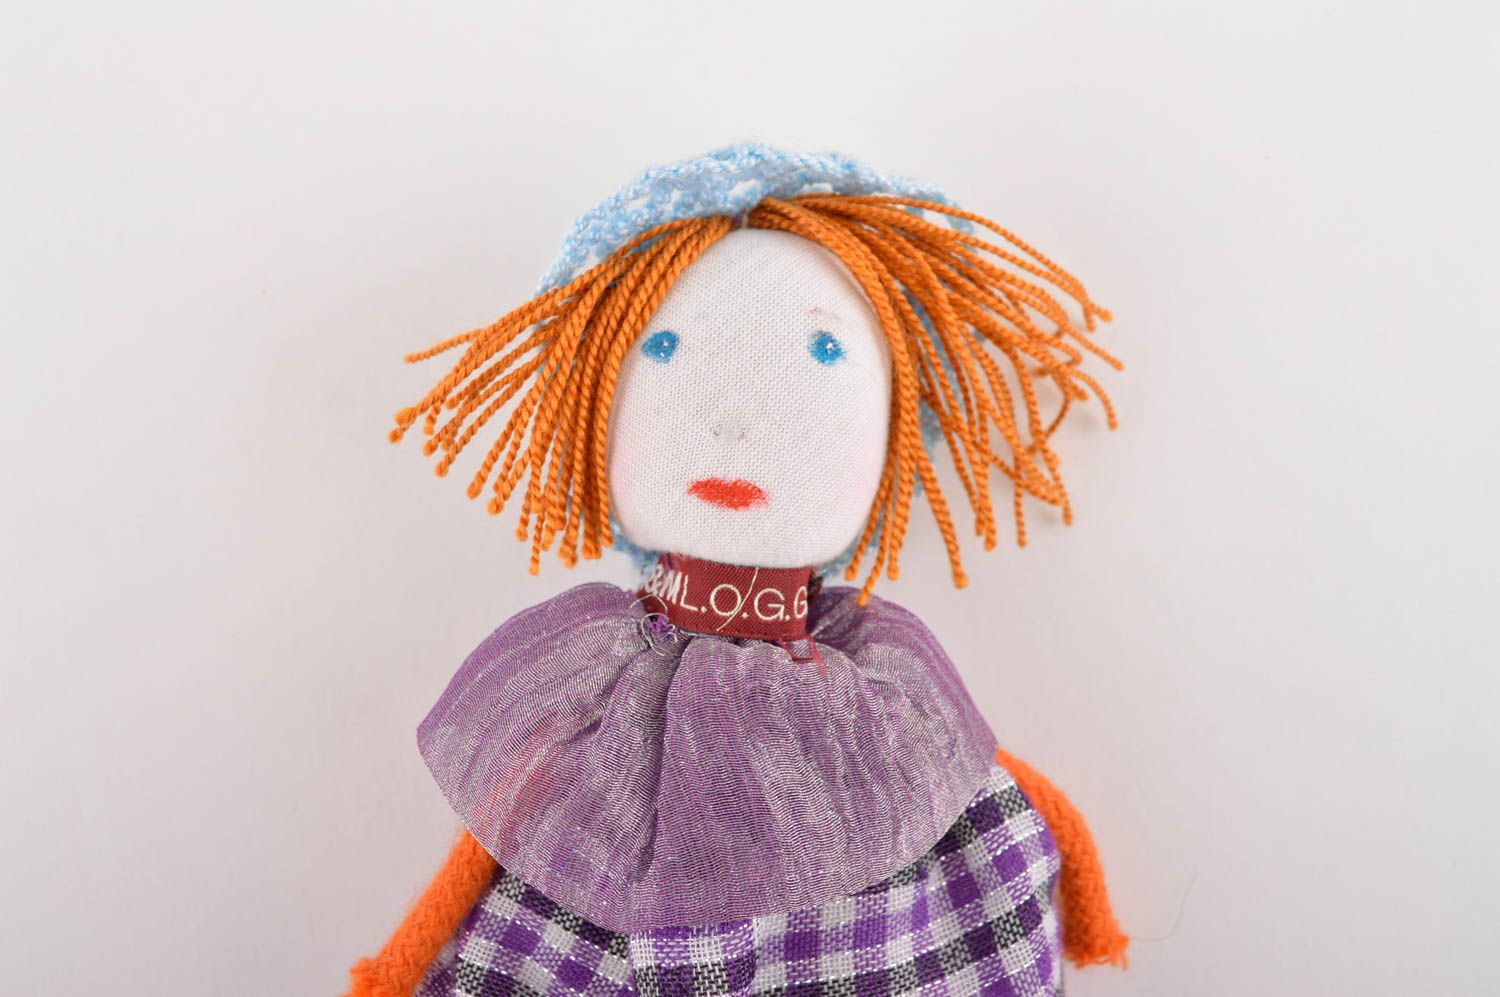 Beautiful handmade rag doll best toys for kids interior design styles gift ideas photo 4